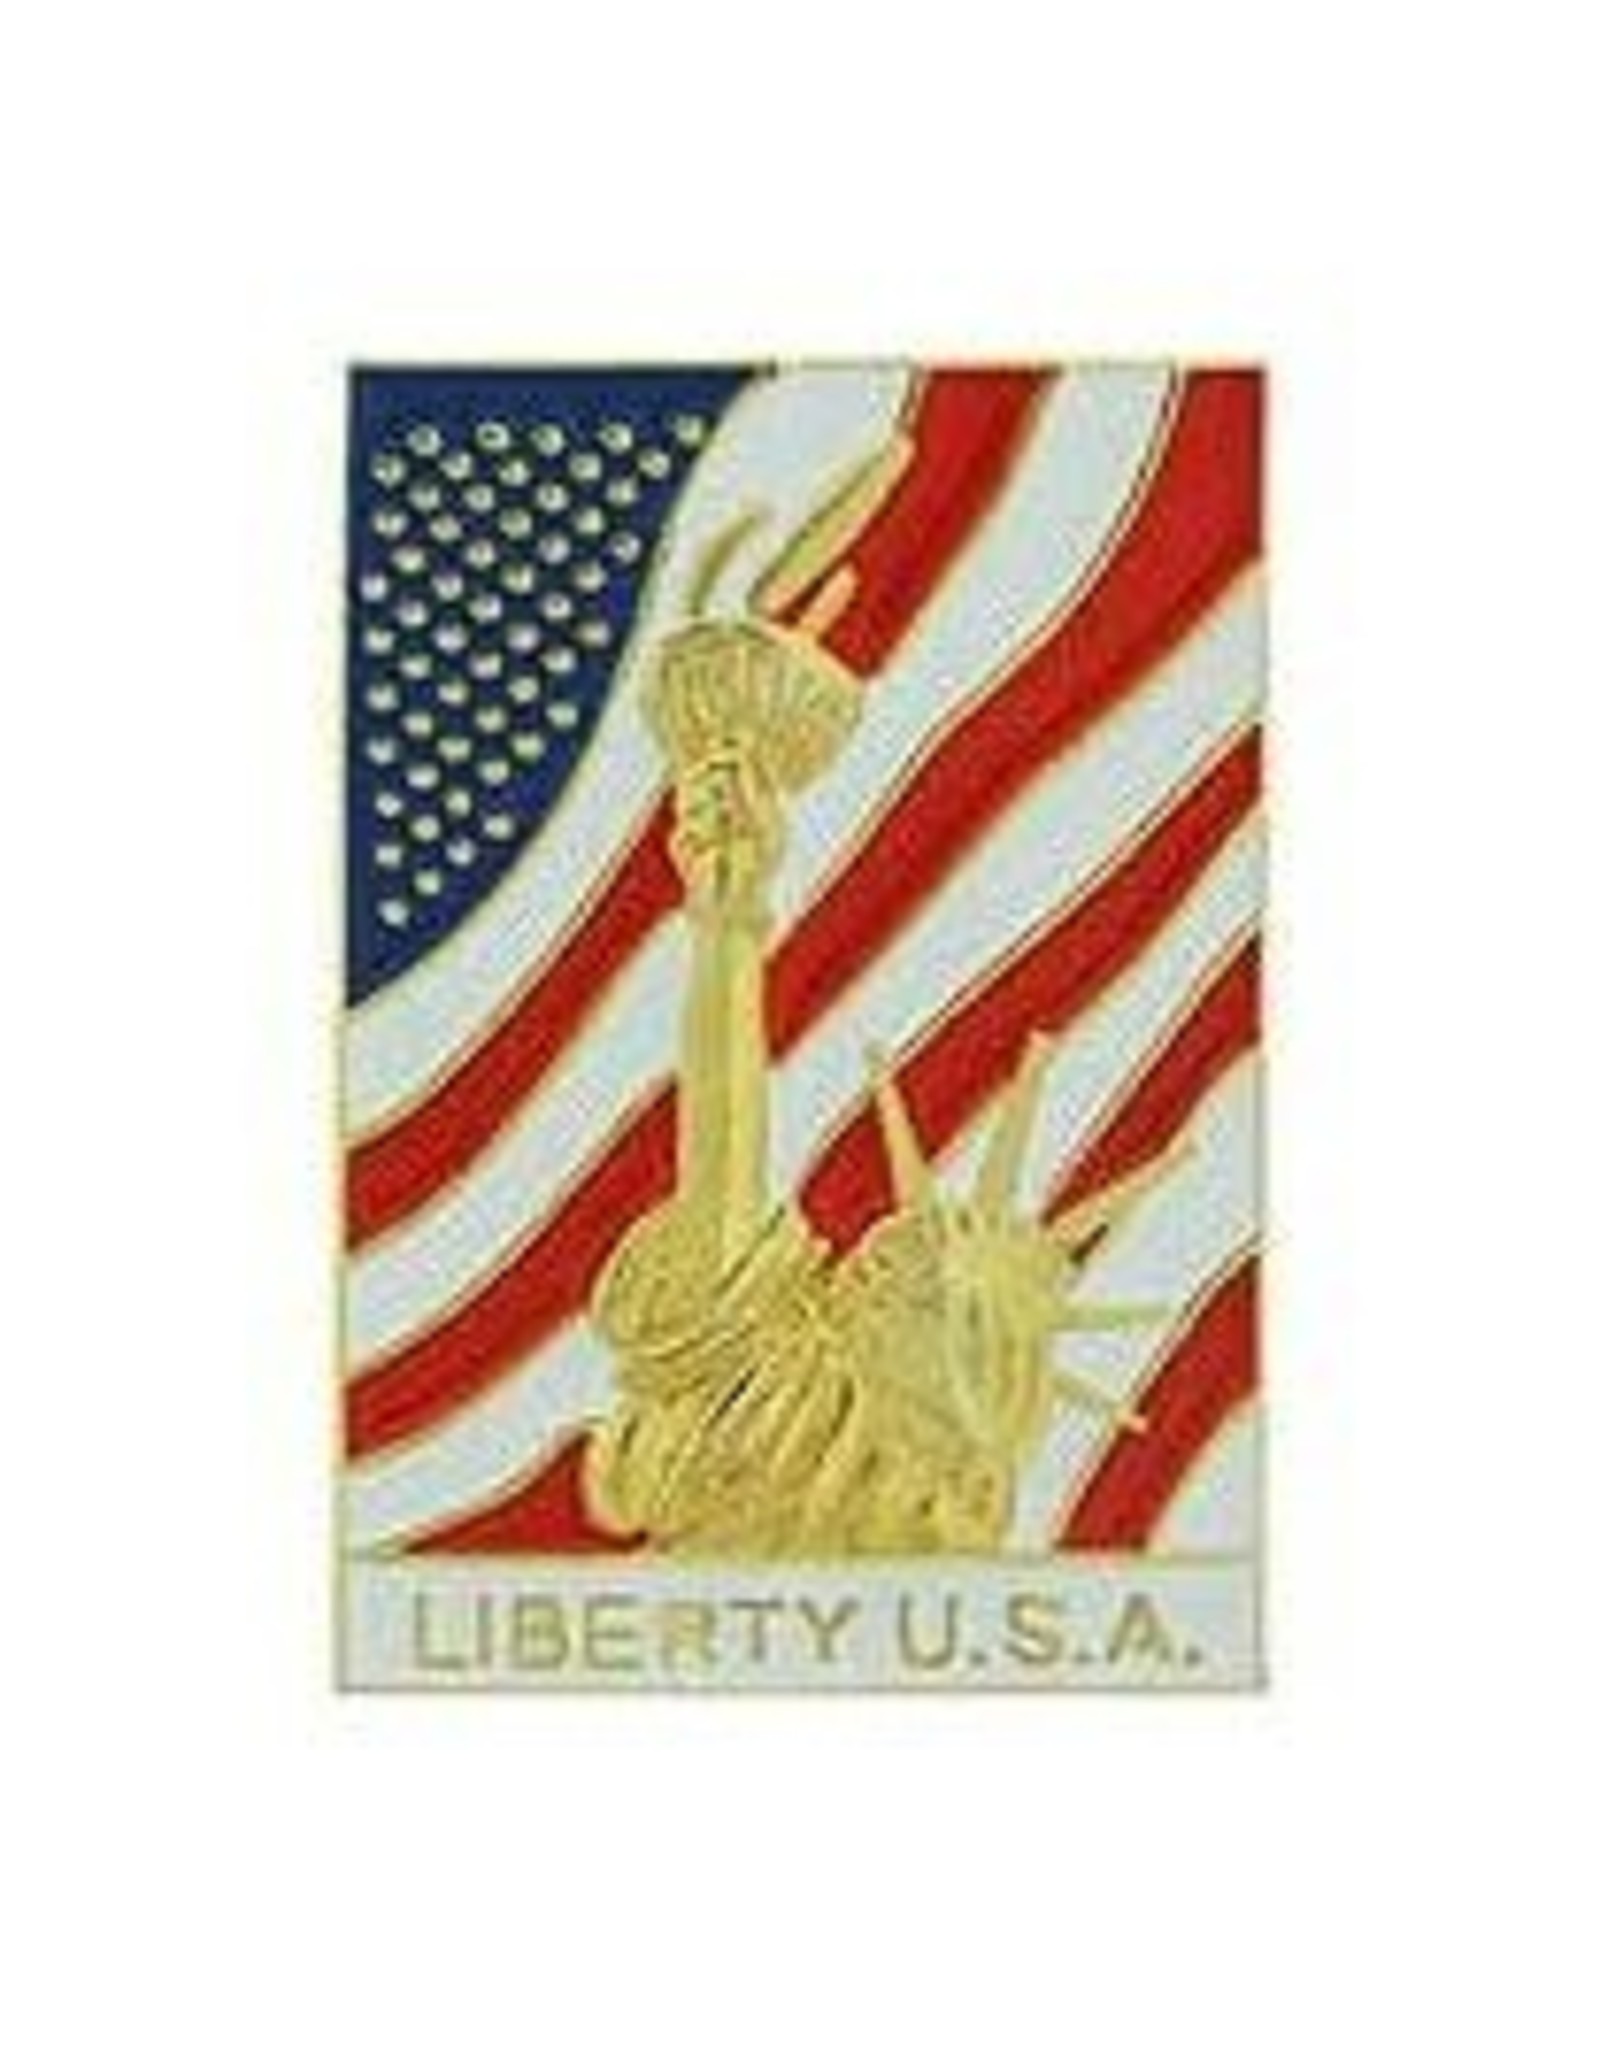 Pin - Statue of Liberty w/ USA Flag